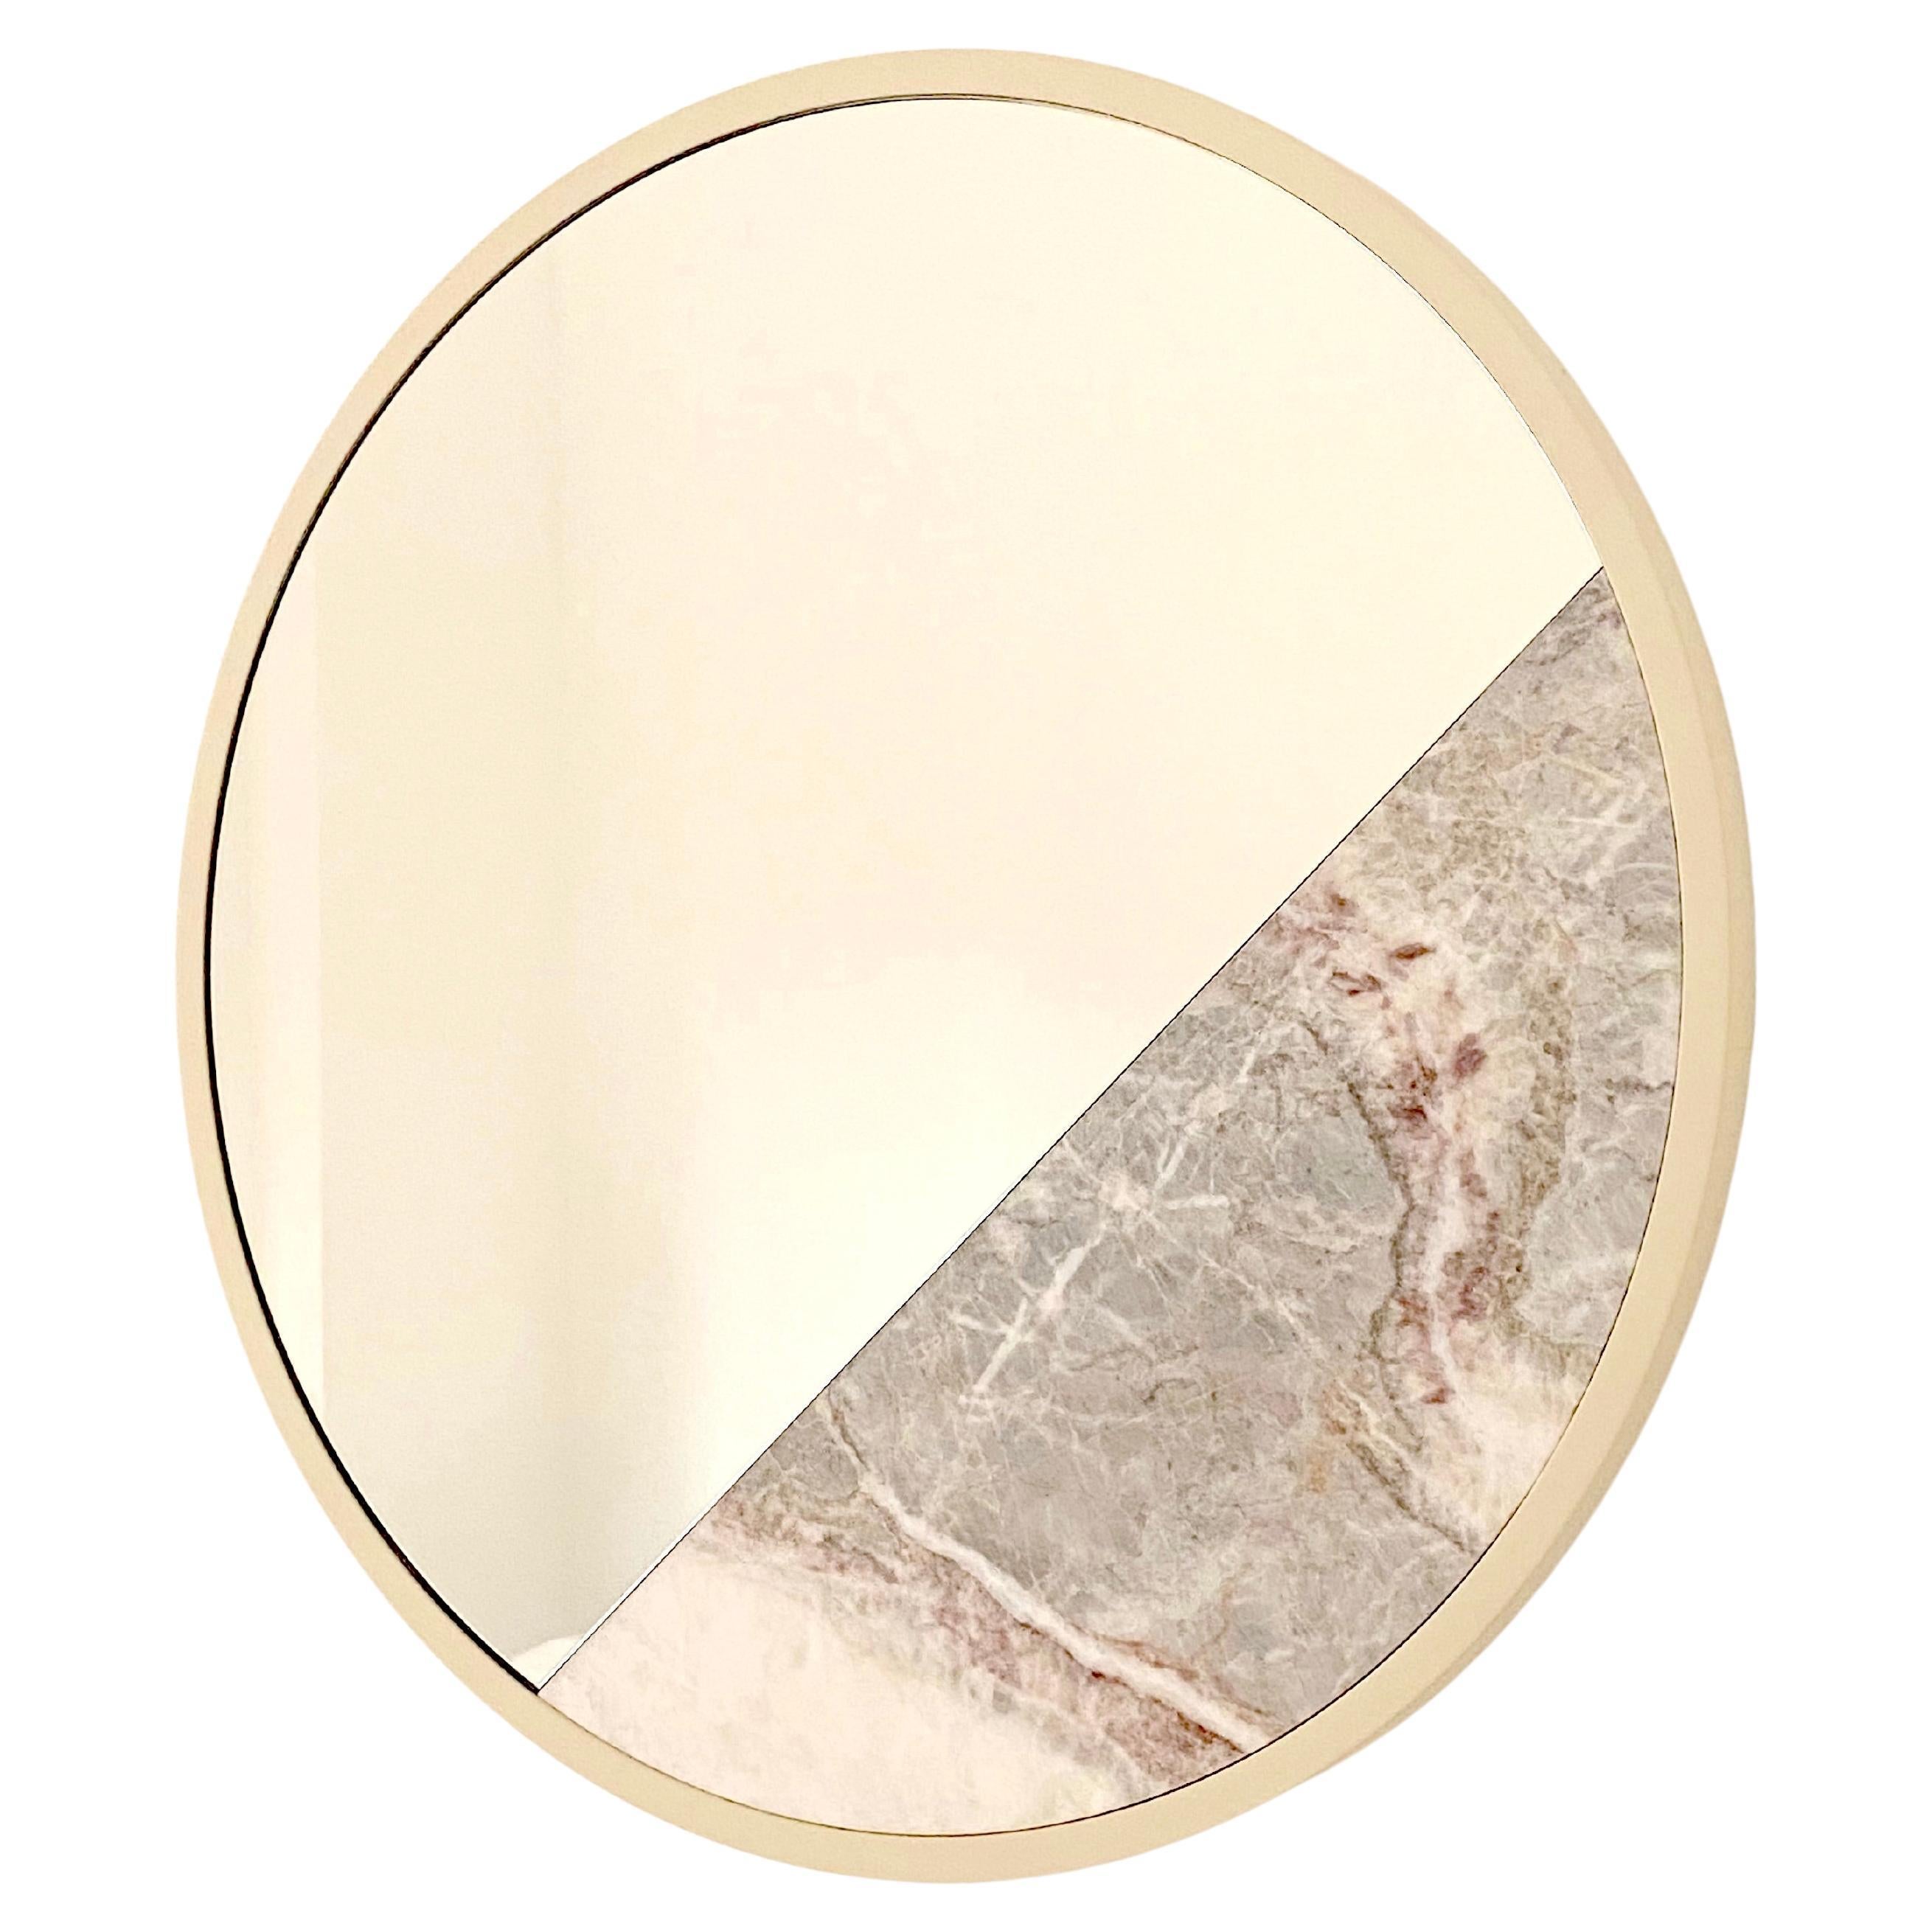 Miroir rond en marbre Fior Di Pesco, fabriqué à la main en Italie